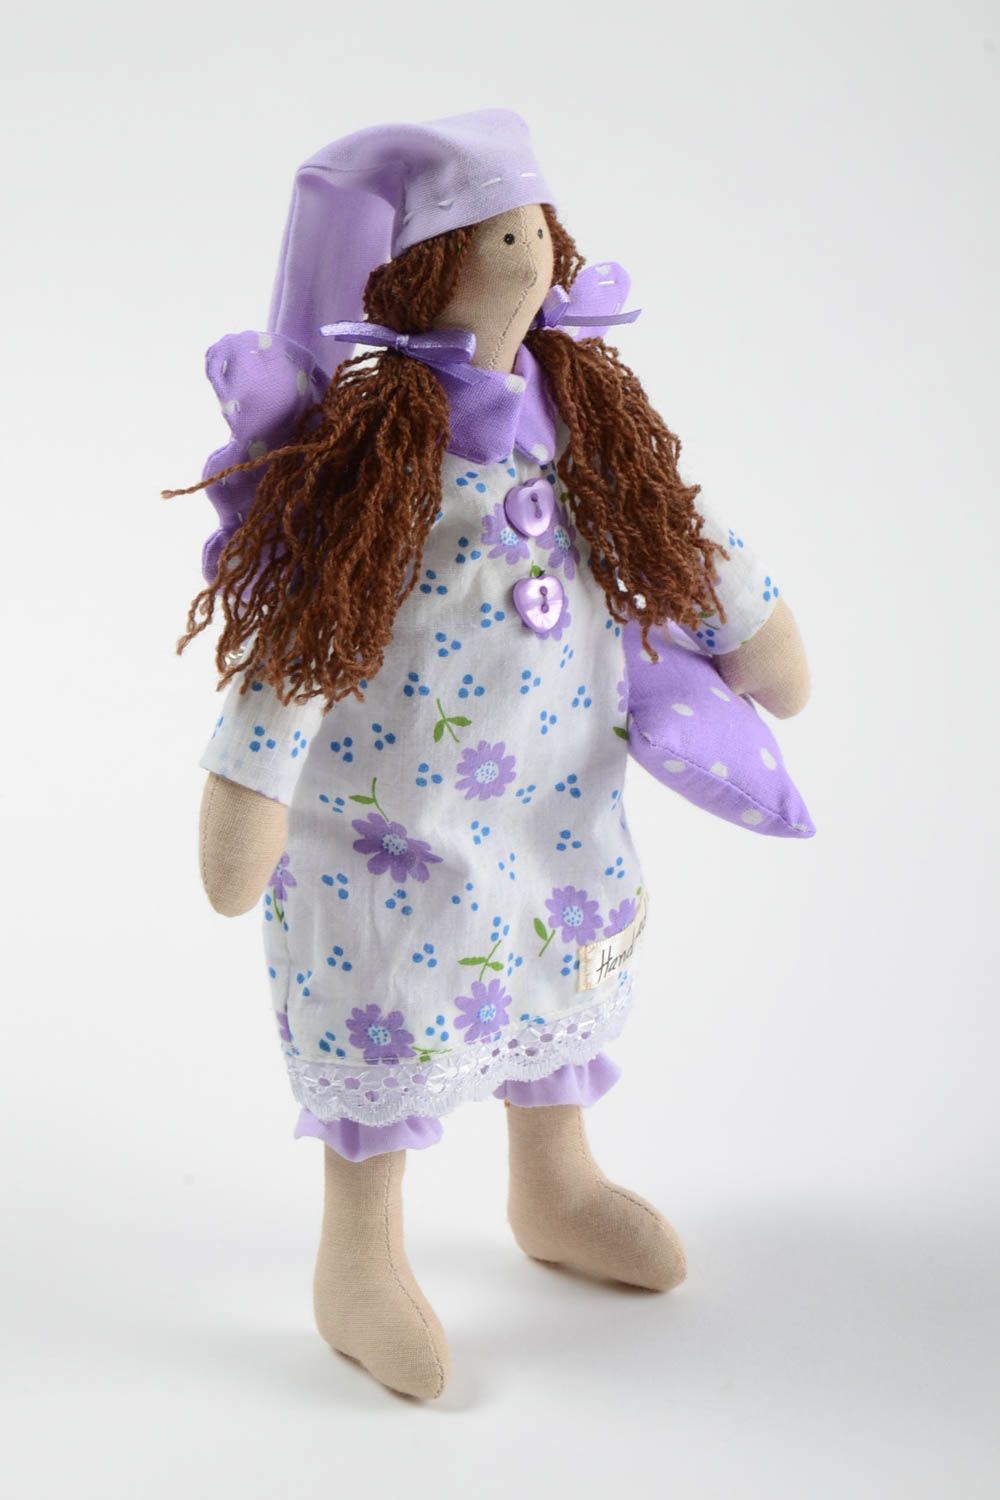 Beautiful handmade rag doll soft toy designs interior design ideas gift ideas photo 2